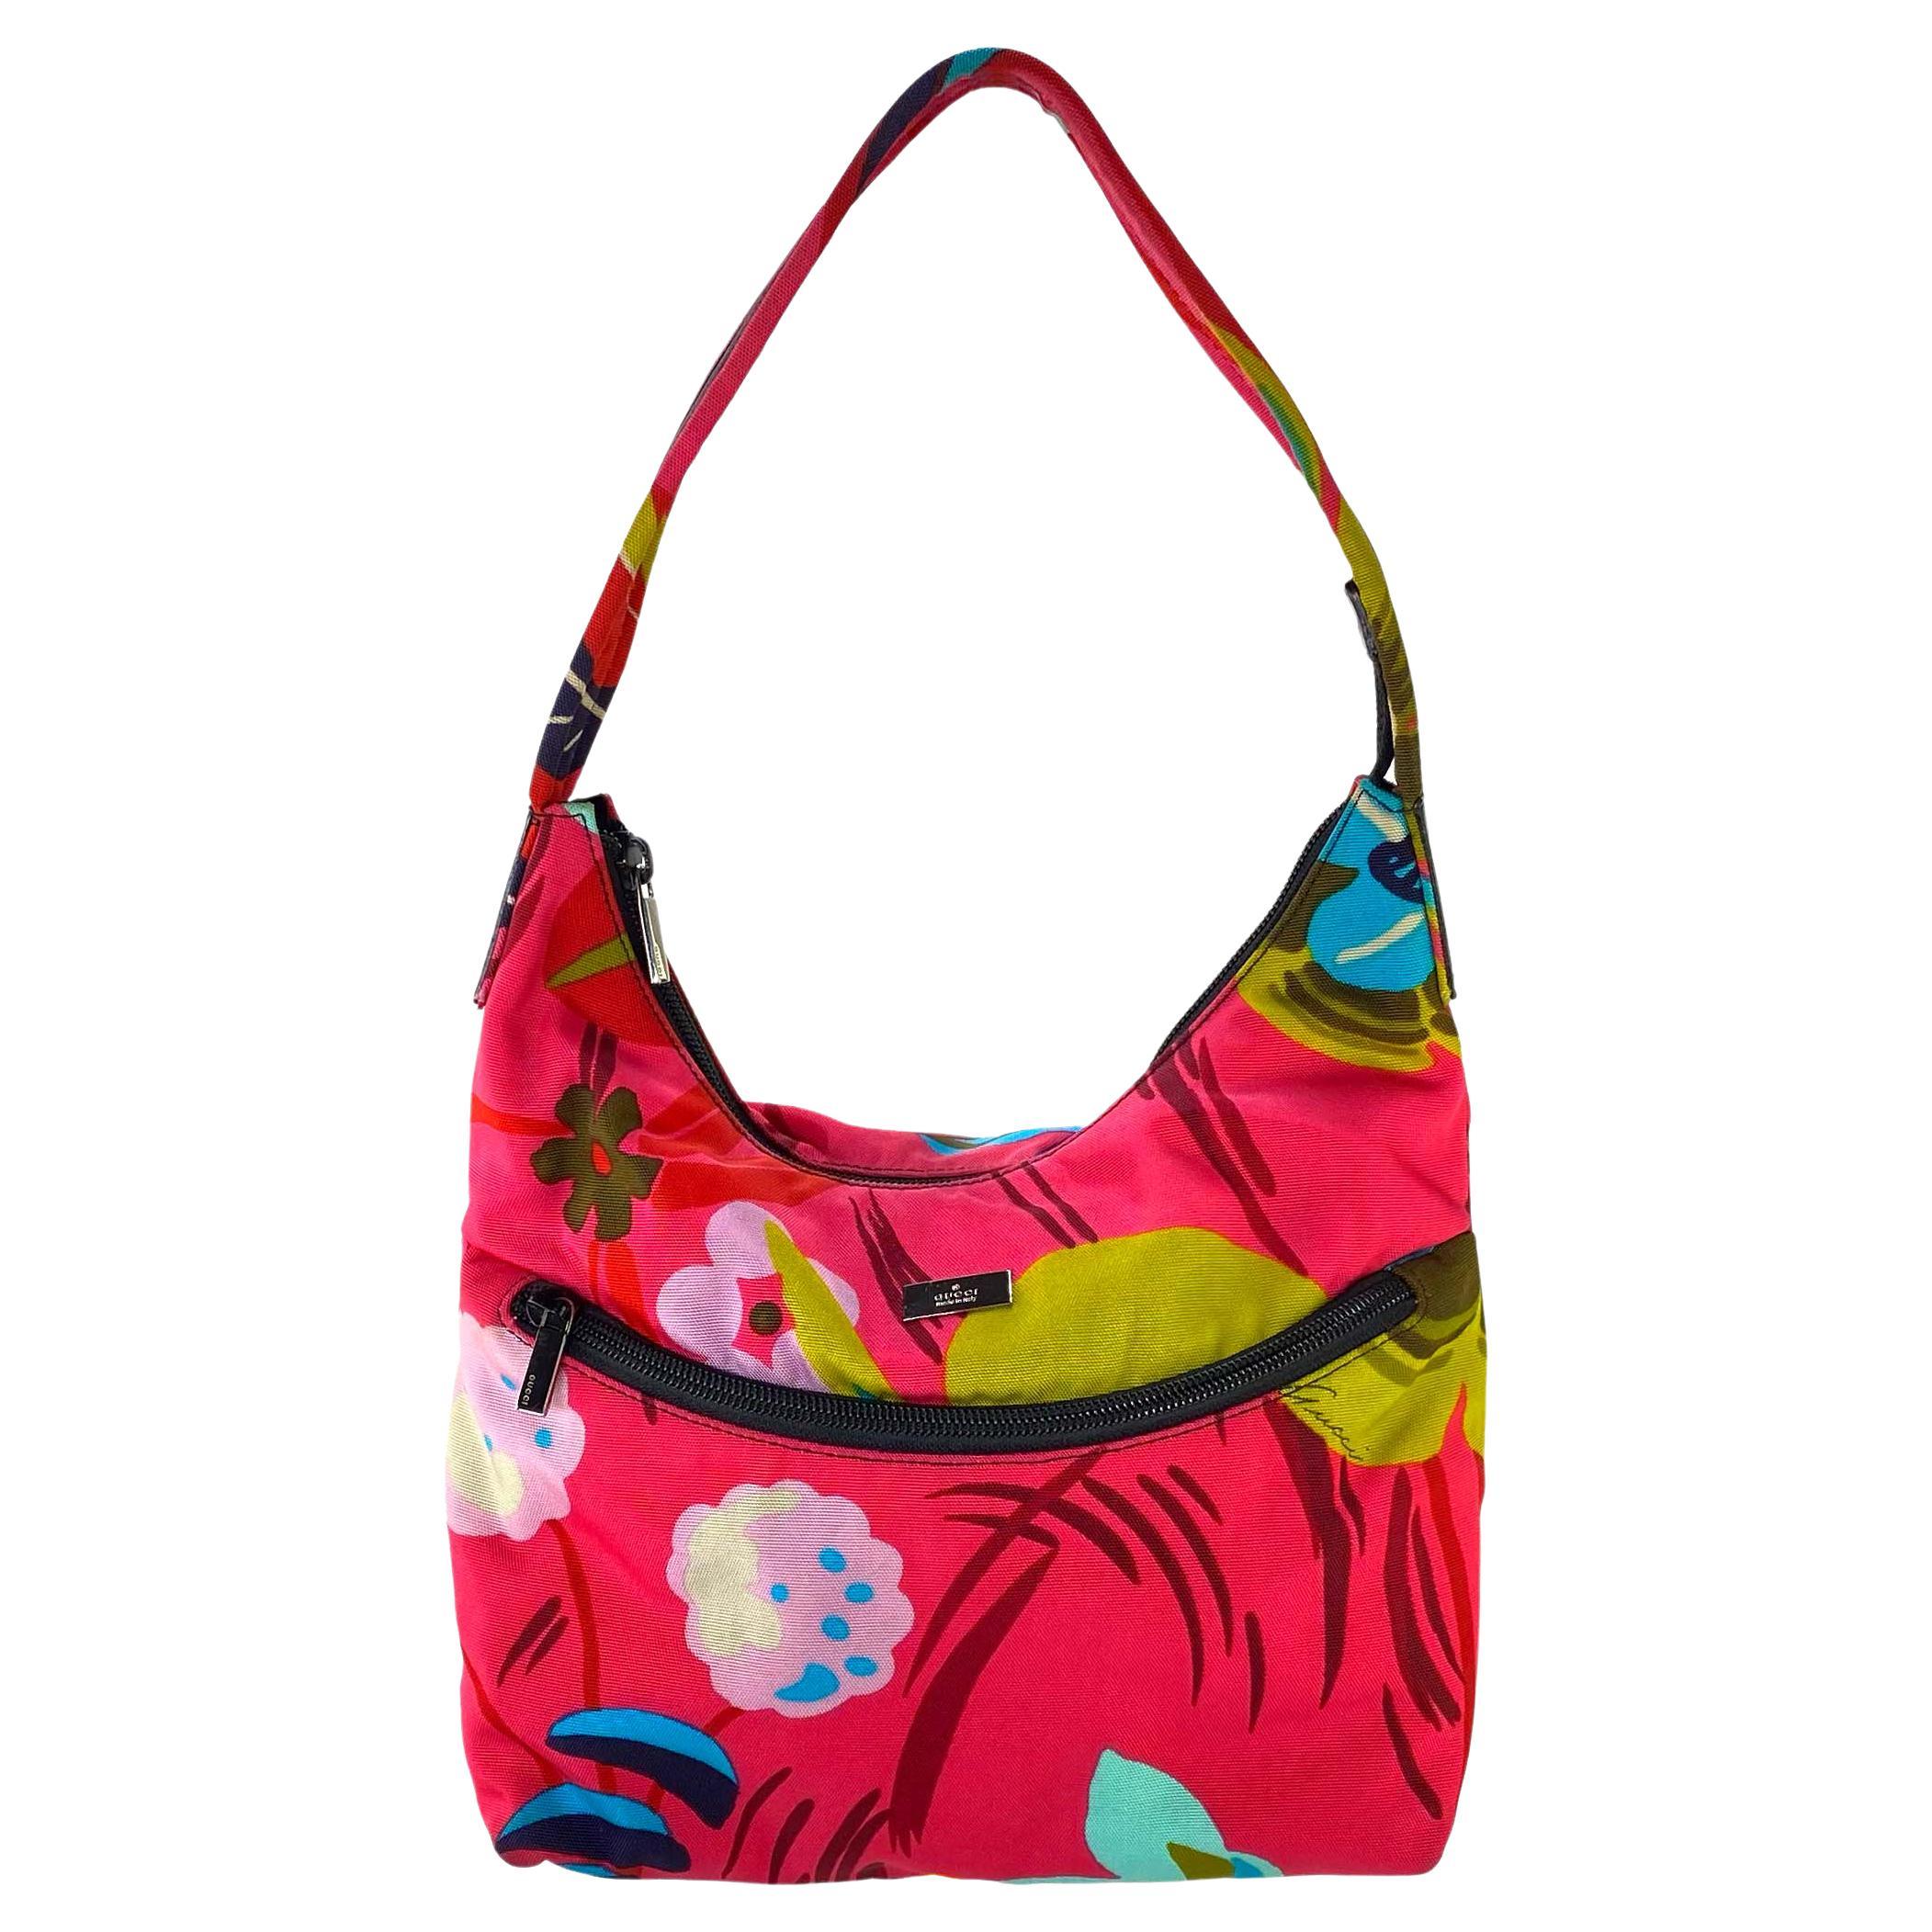 S/S 1999 Gucci by Tom Ford Pink Floral Nylon Shoulder Bag